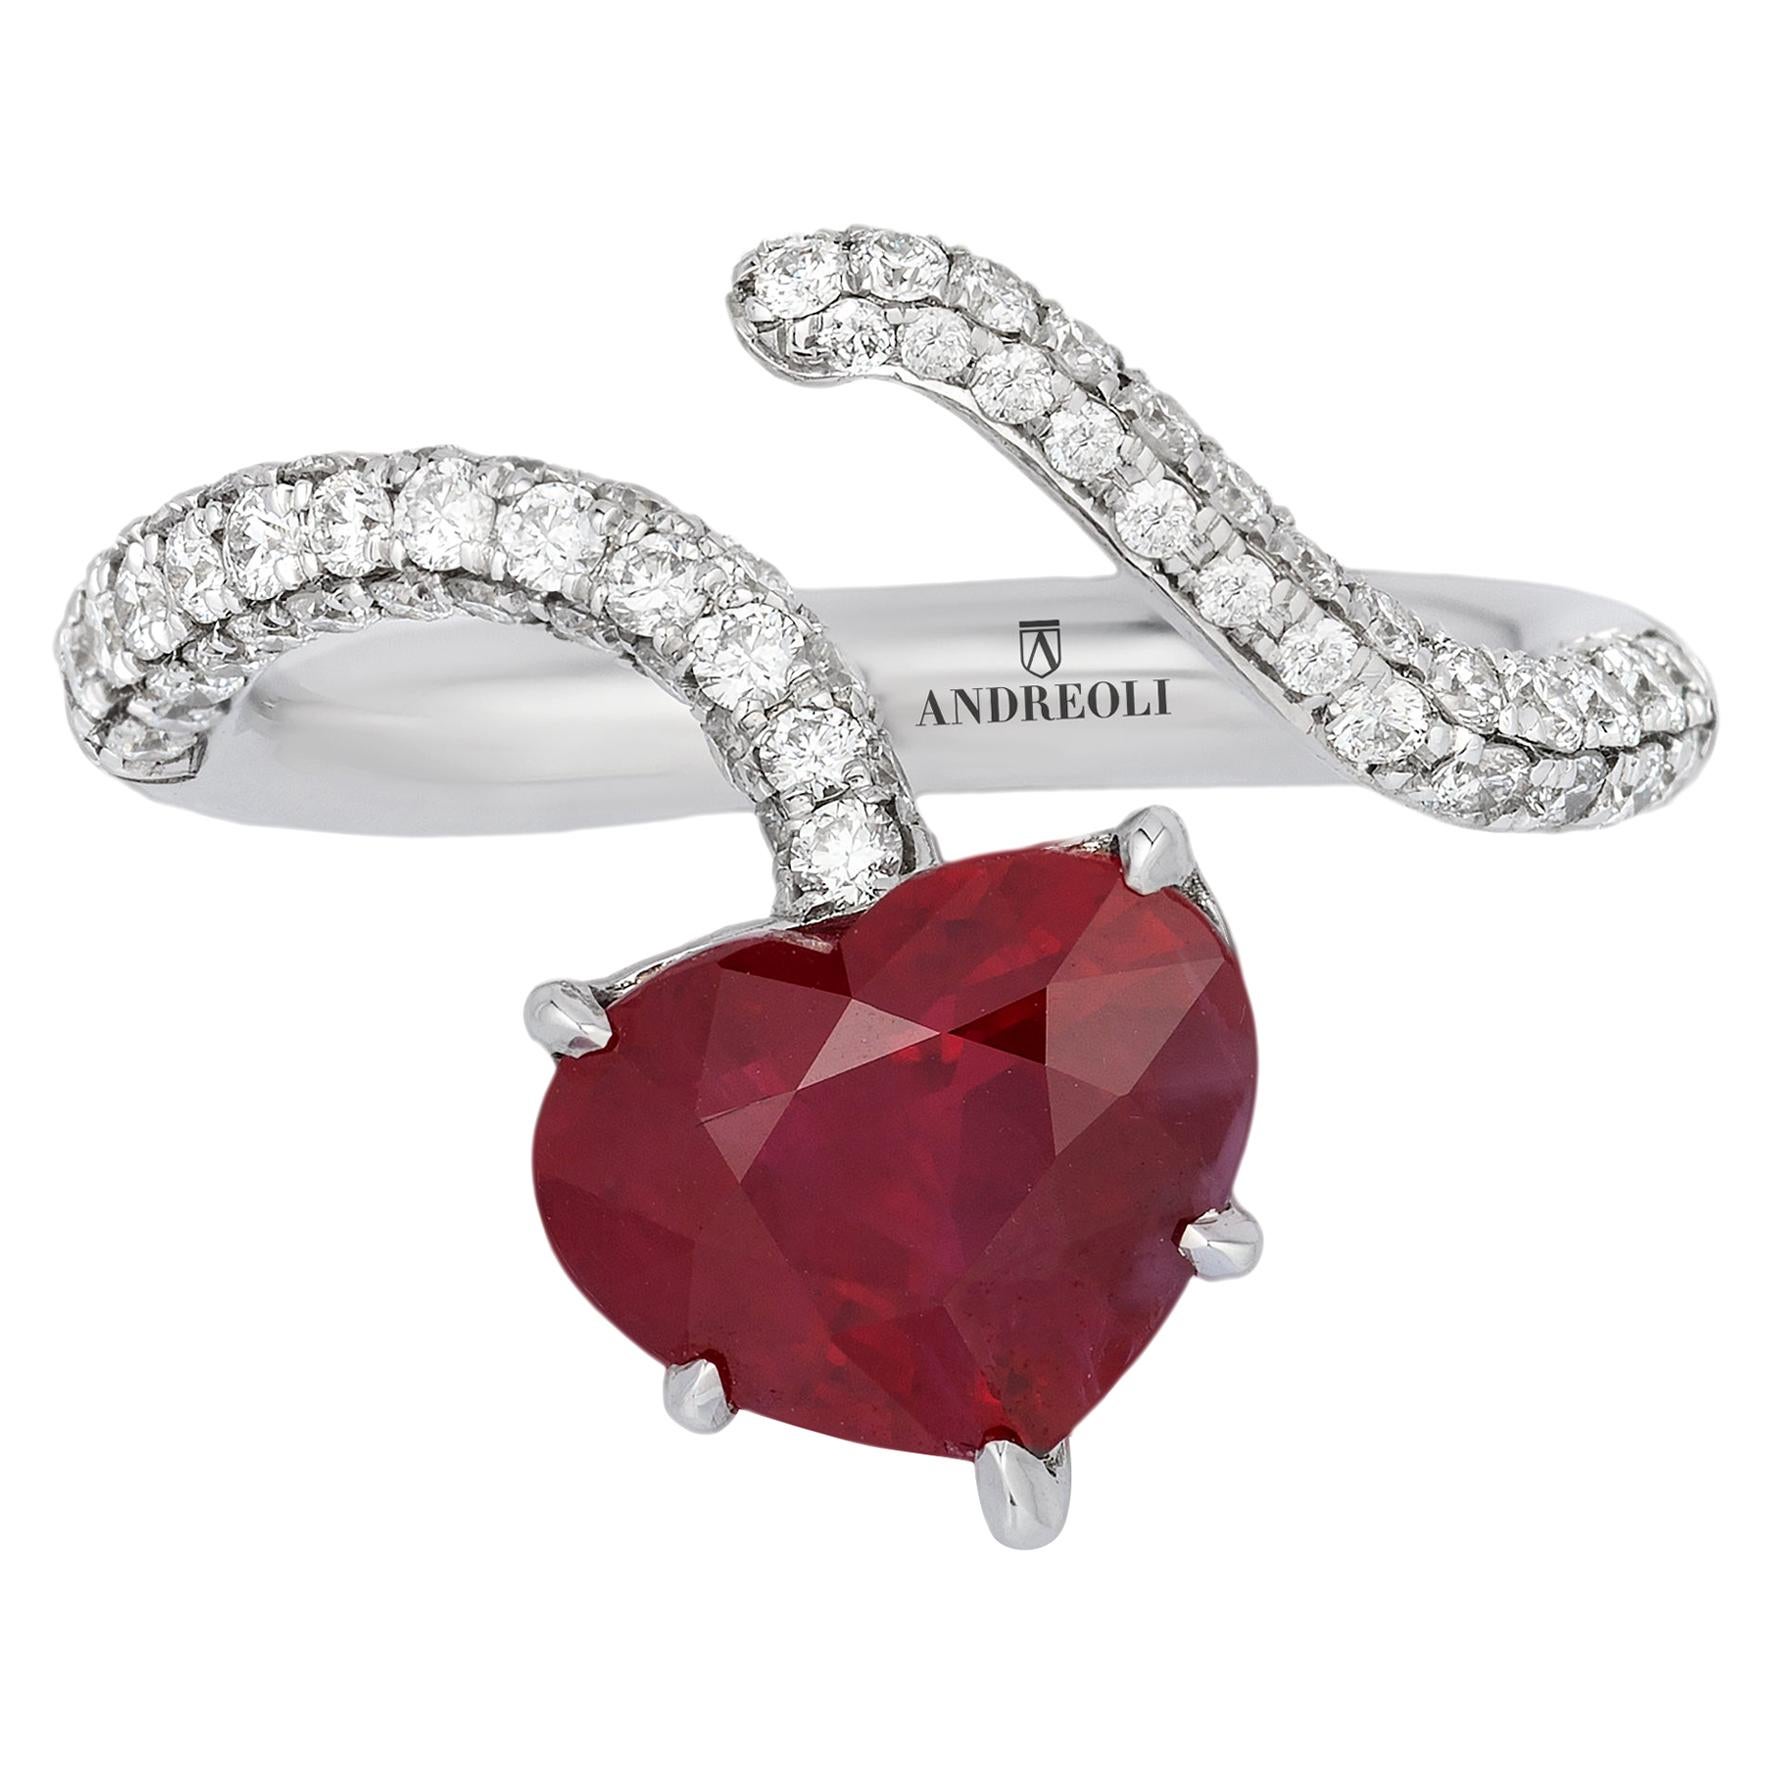 Andreoli Certified 4.02 Carat Burma Ruby Heart Shape Ring Diamond 18 Karat Gold For Sale